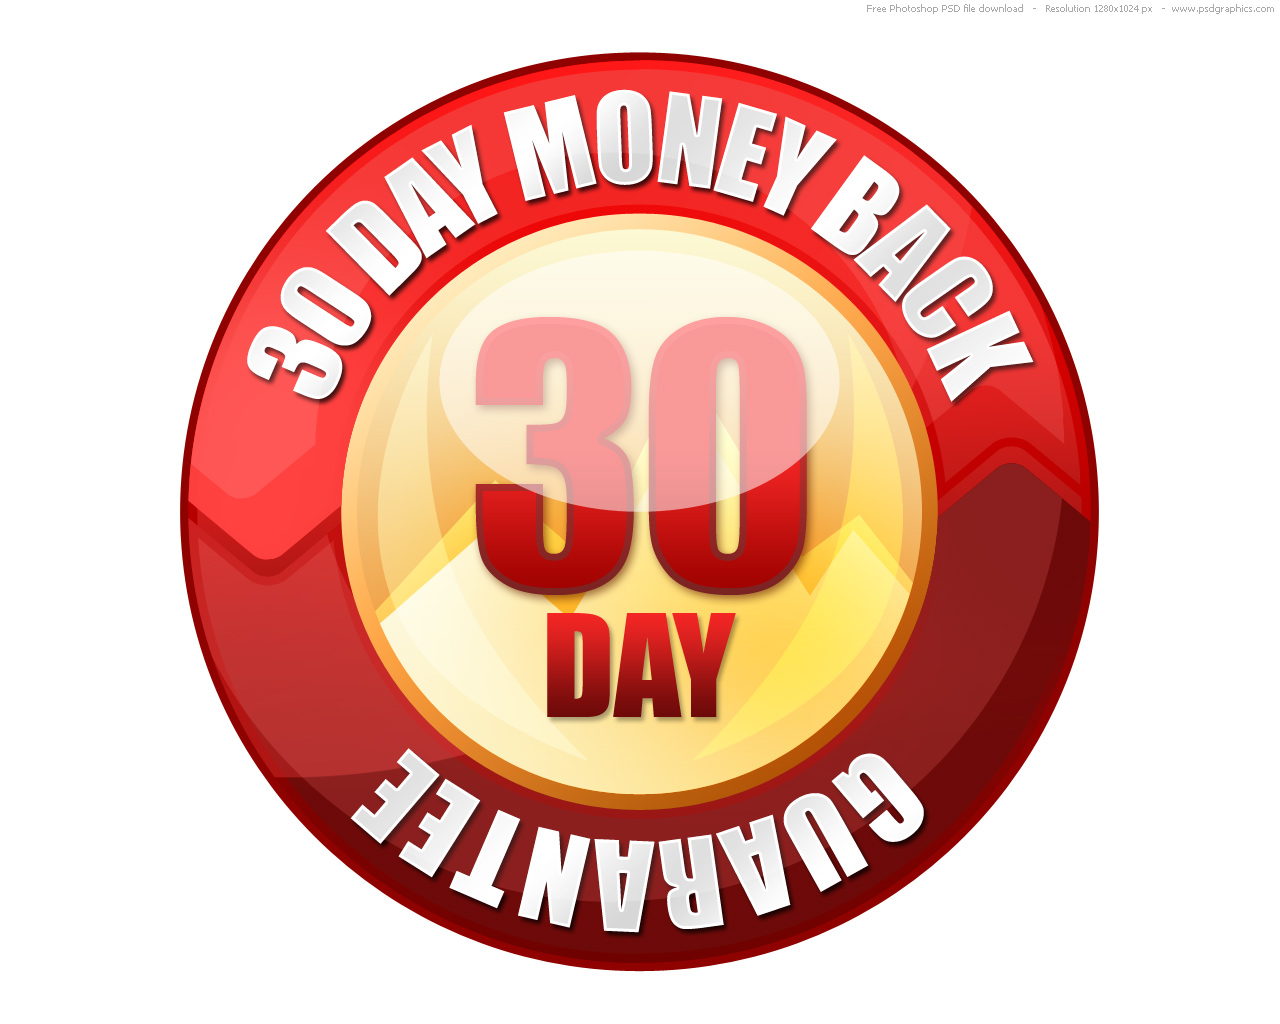 30 Day Money Back Promise